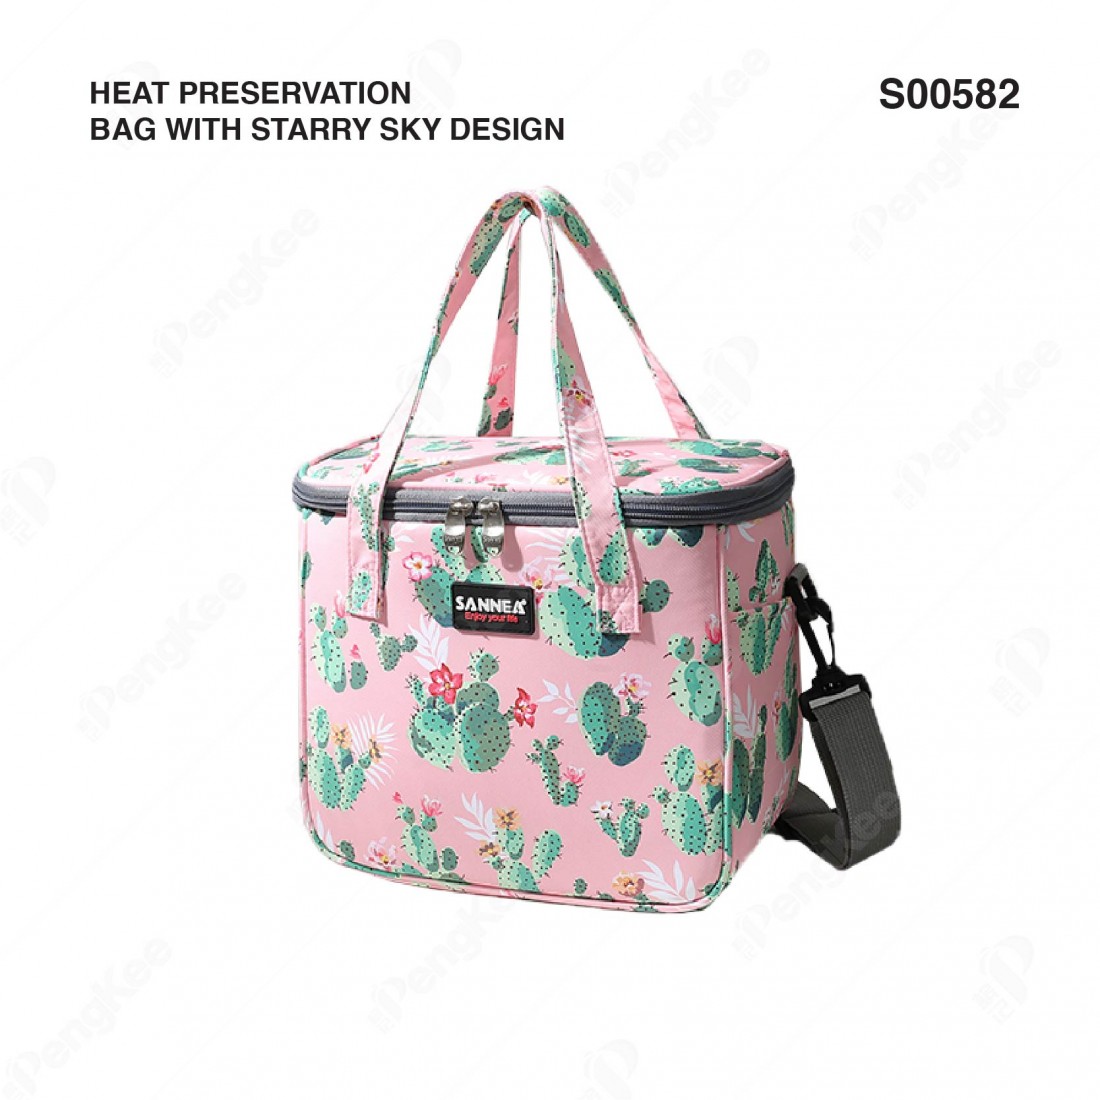 (CL1935-1) HEAT PRESERVATION BAG with CASTUS DESIGN (8L) (24*15*20 cm)